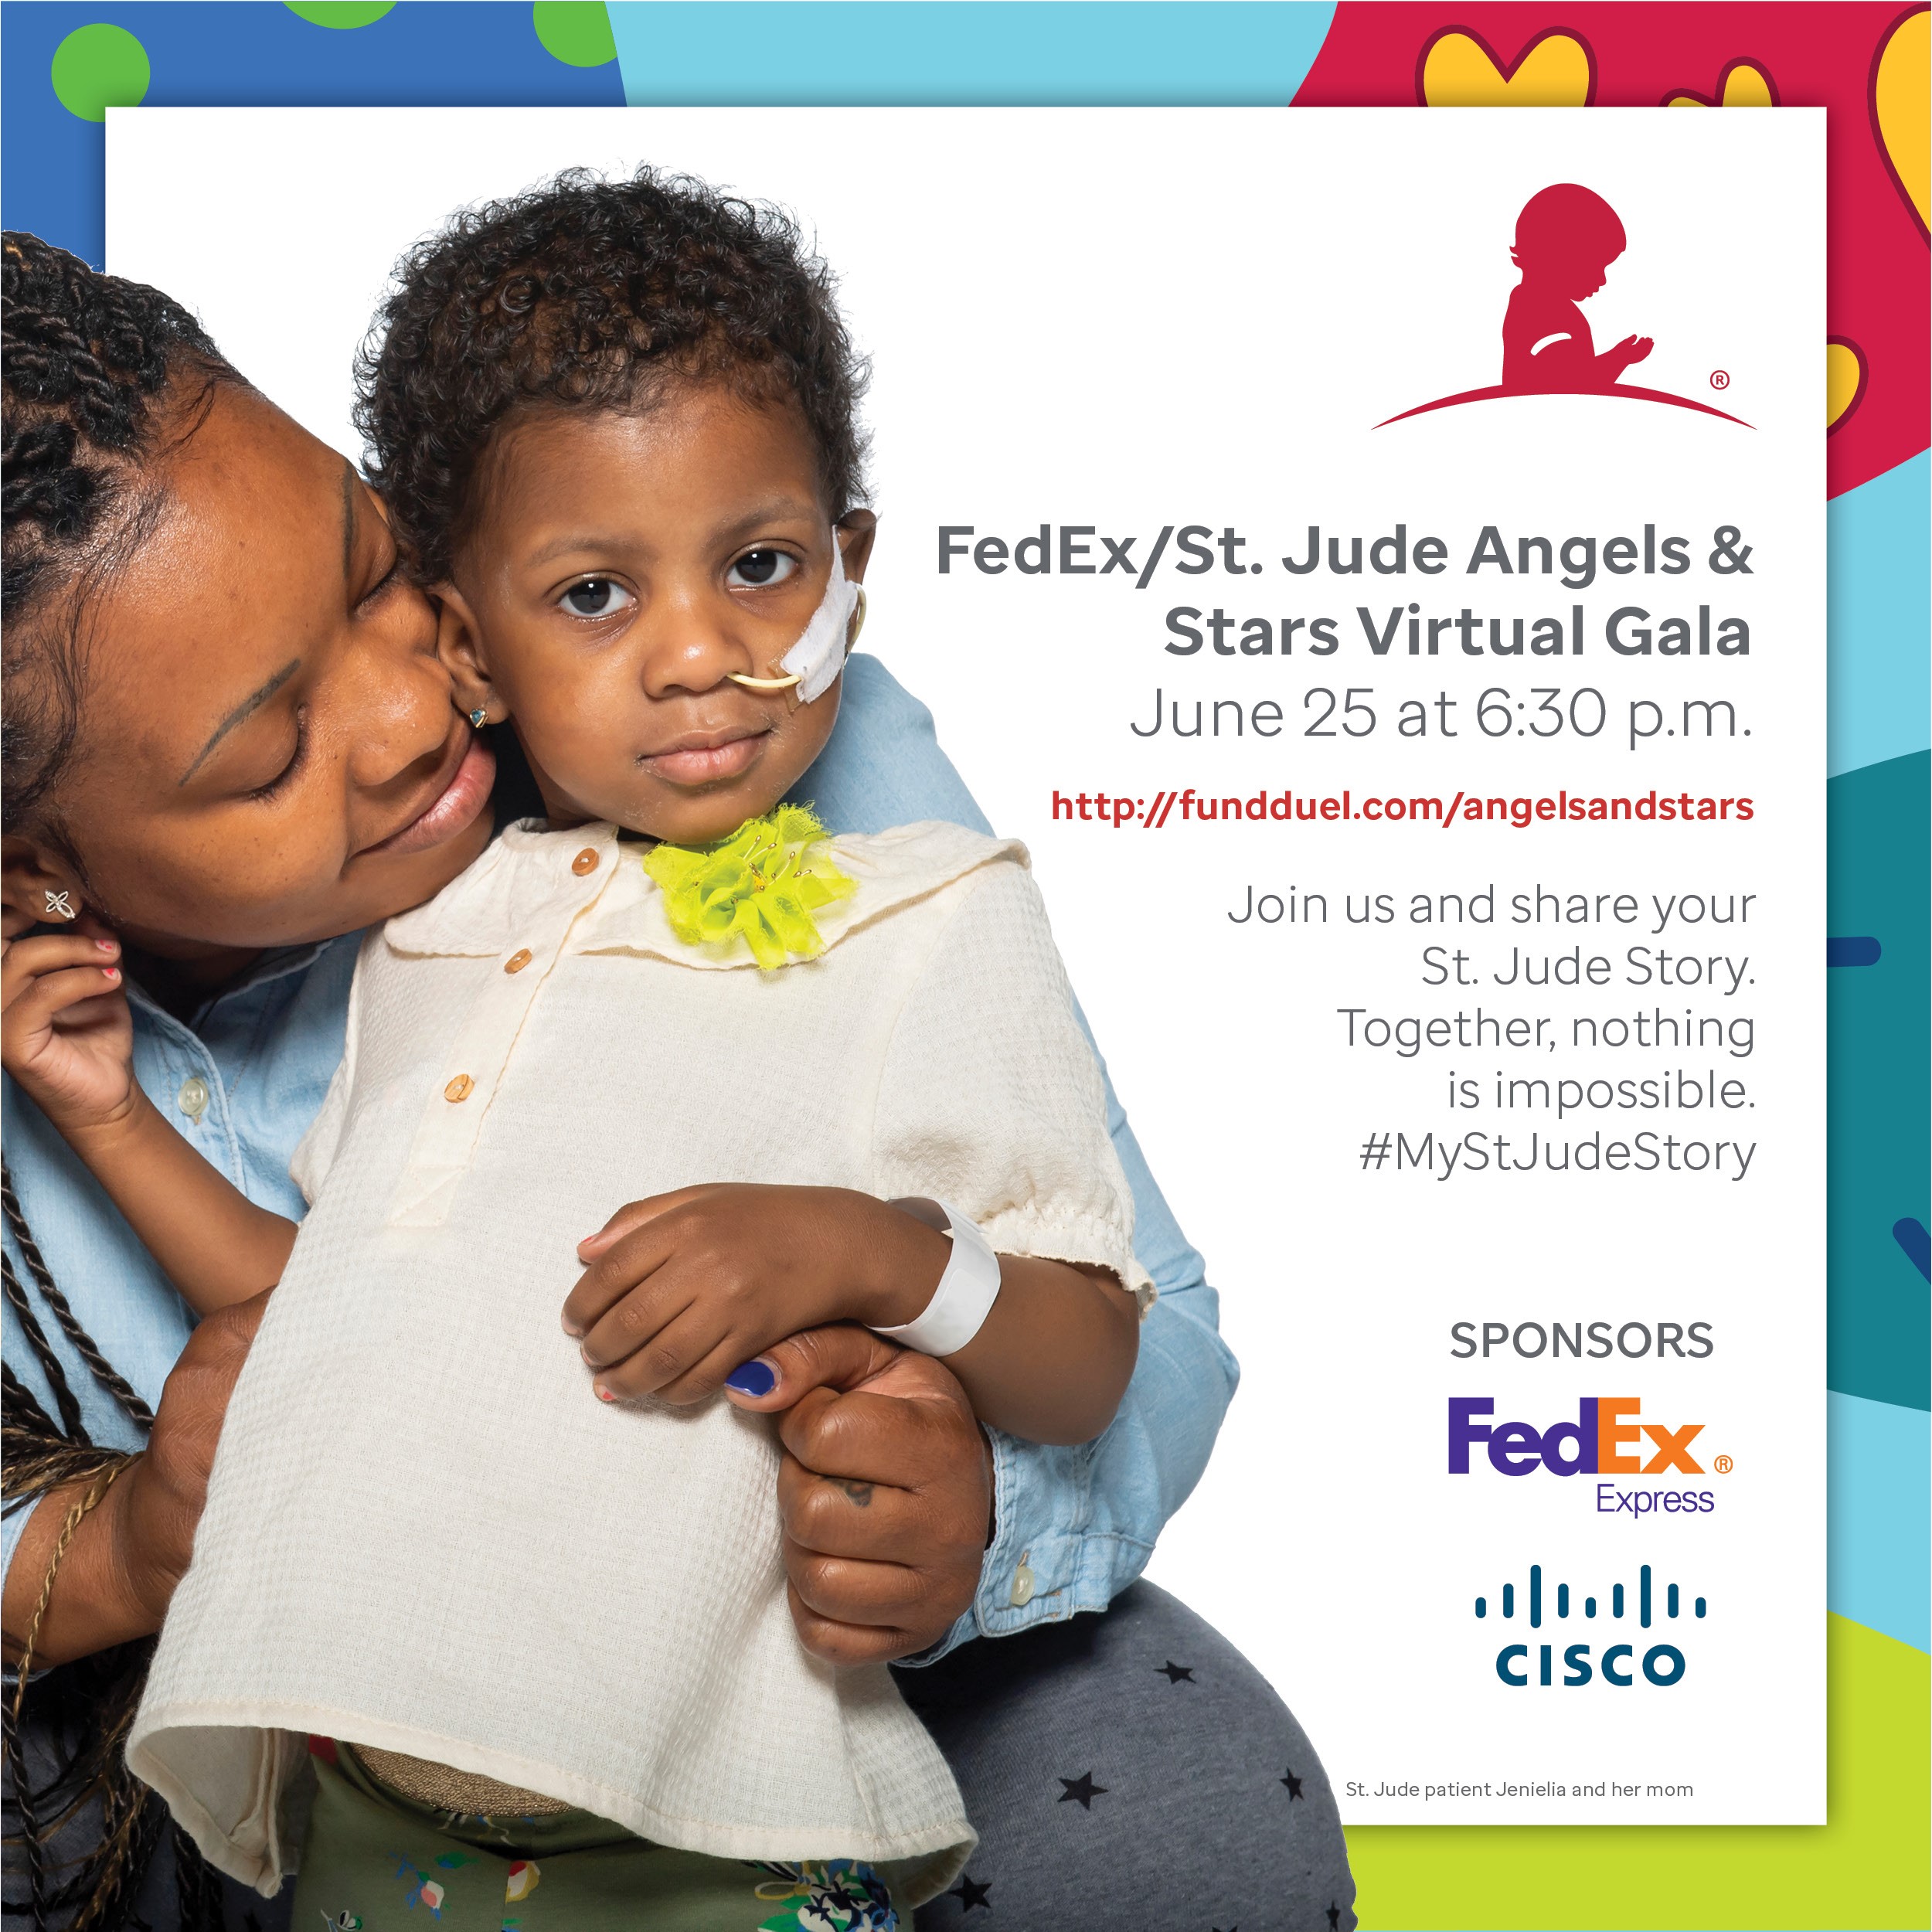 FedEx/St. Jude Angels and Stars Virtual Gala 